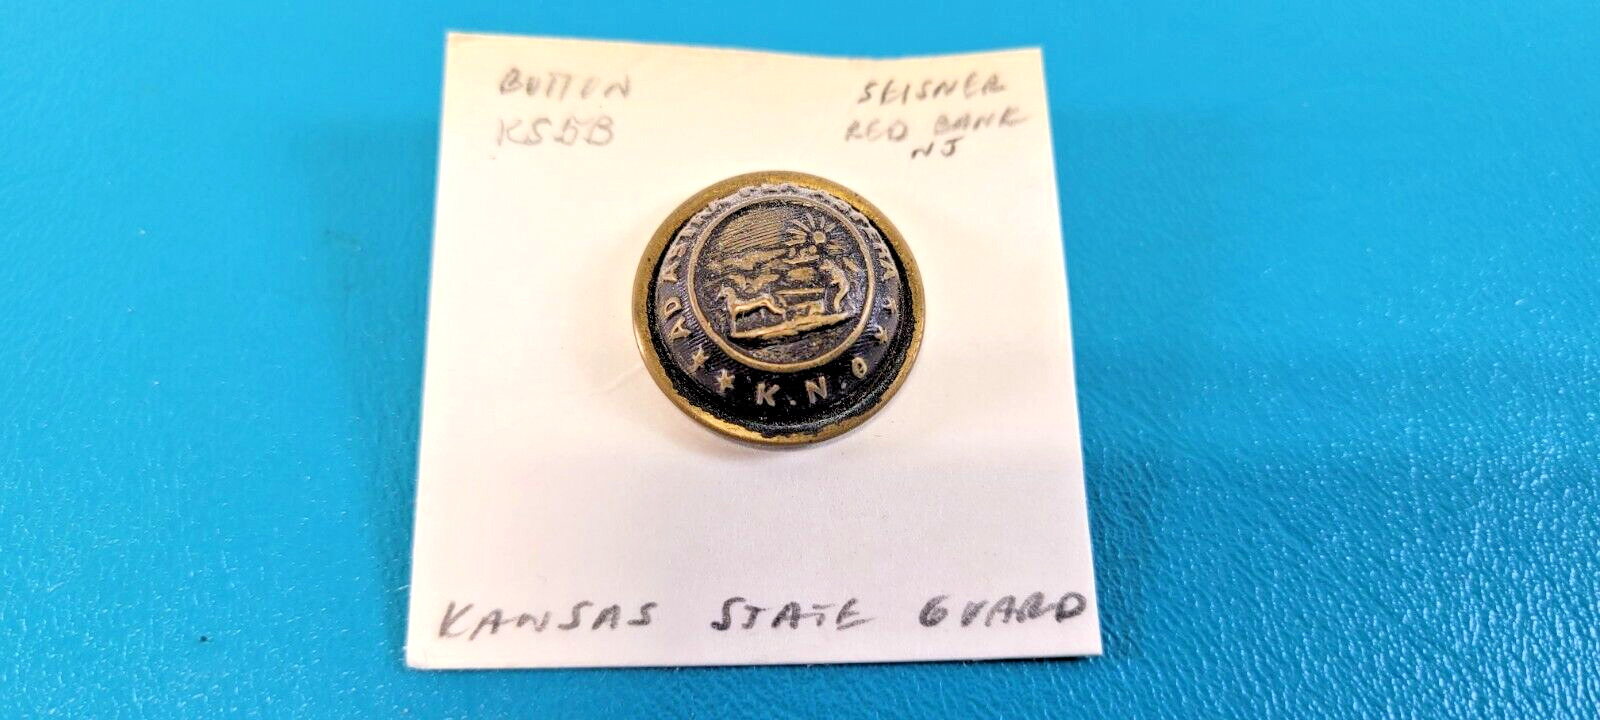 Antique Kansas State Guard Military Button Seisner Red Bank NJ   KA